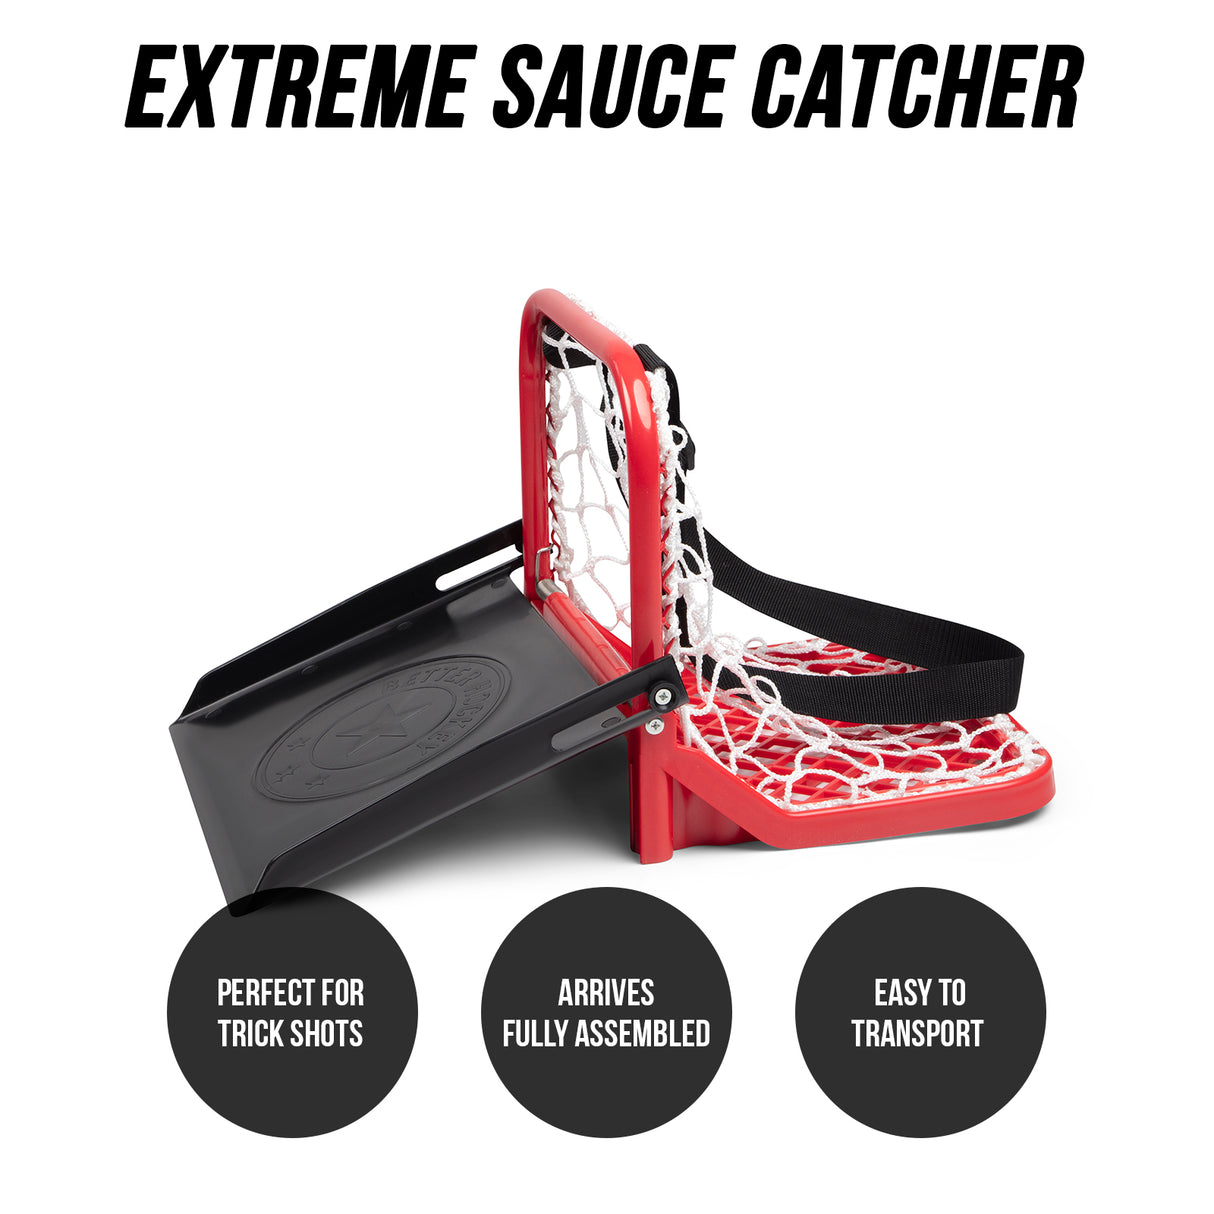 Extreme Hockey Sauce Catcher